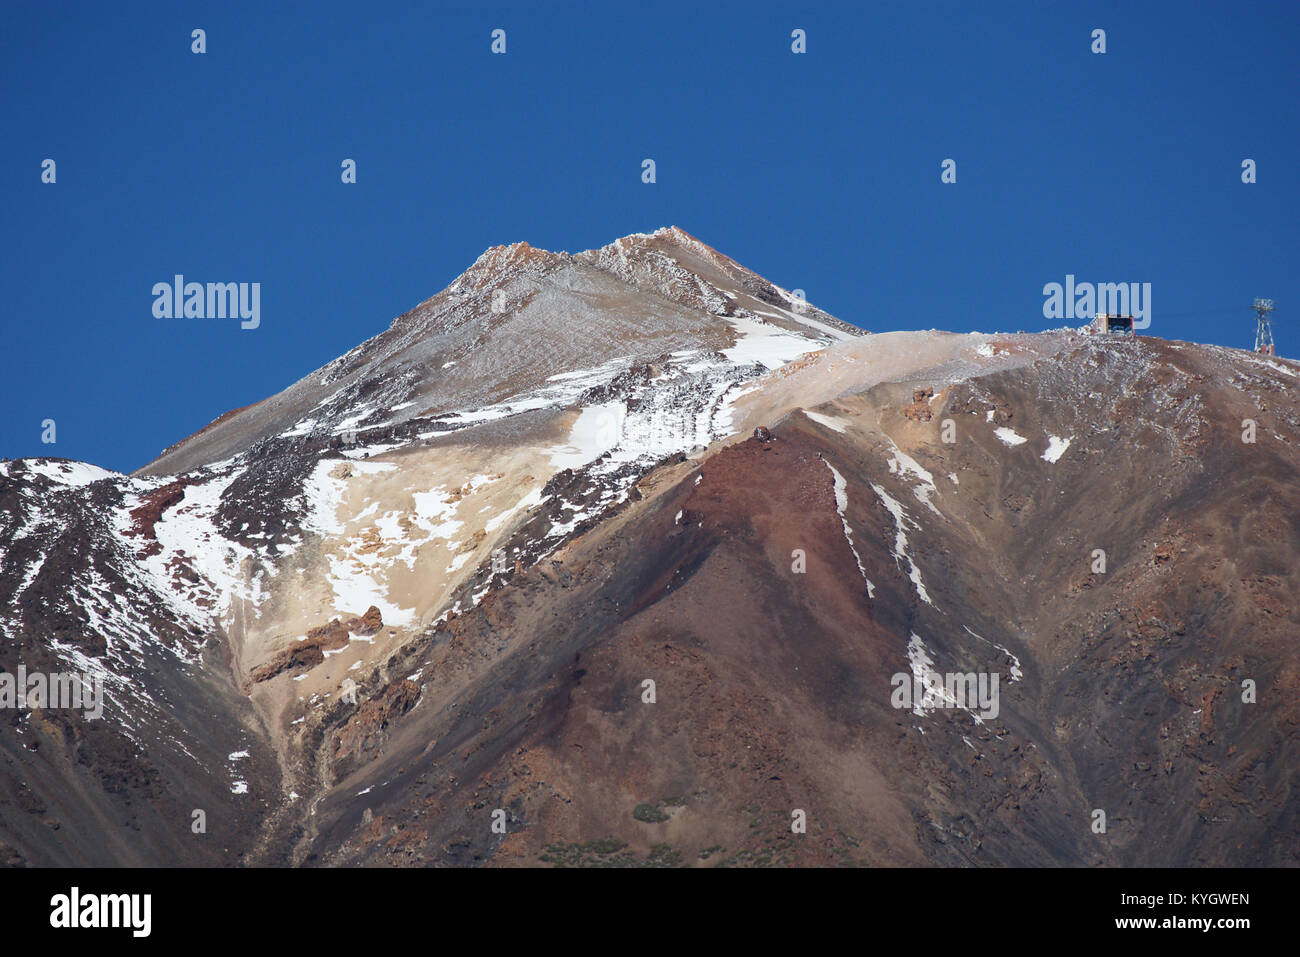 The snowy peak of the volcano Pico del Teide Stock Photo